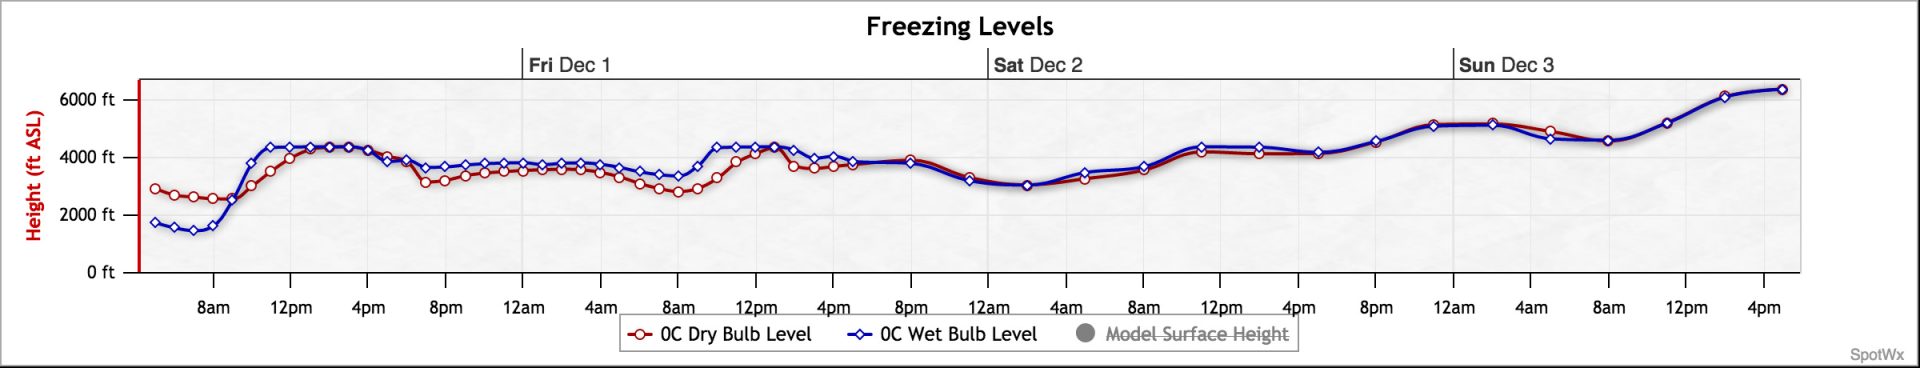 forecasted freezing levels from the NAM model